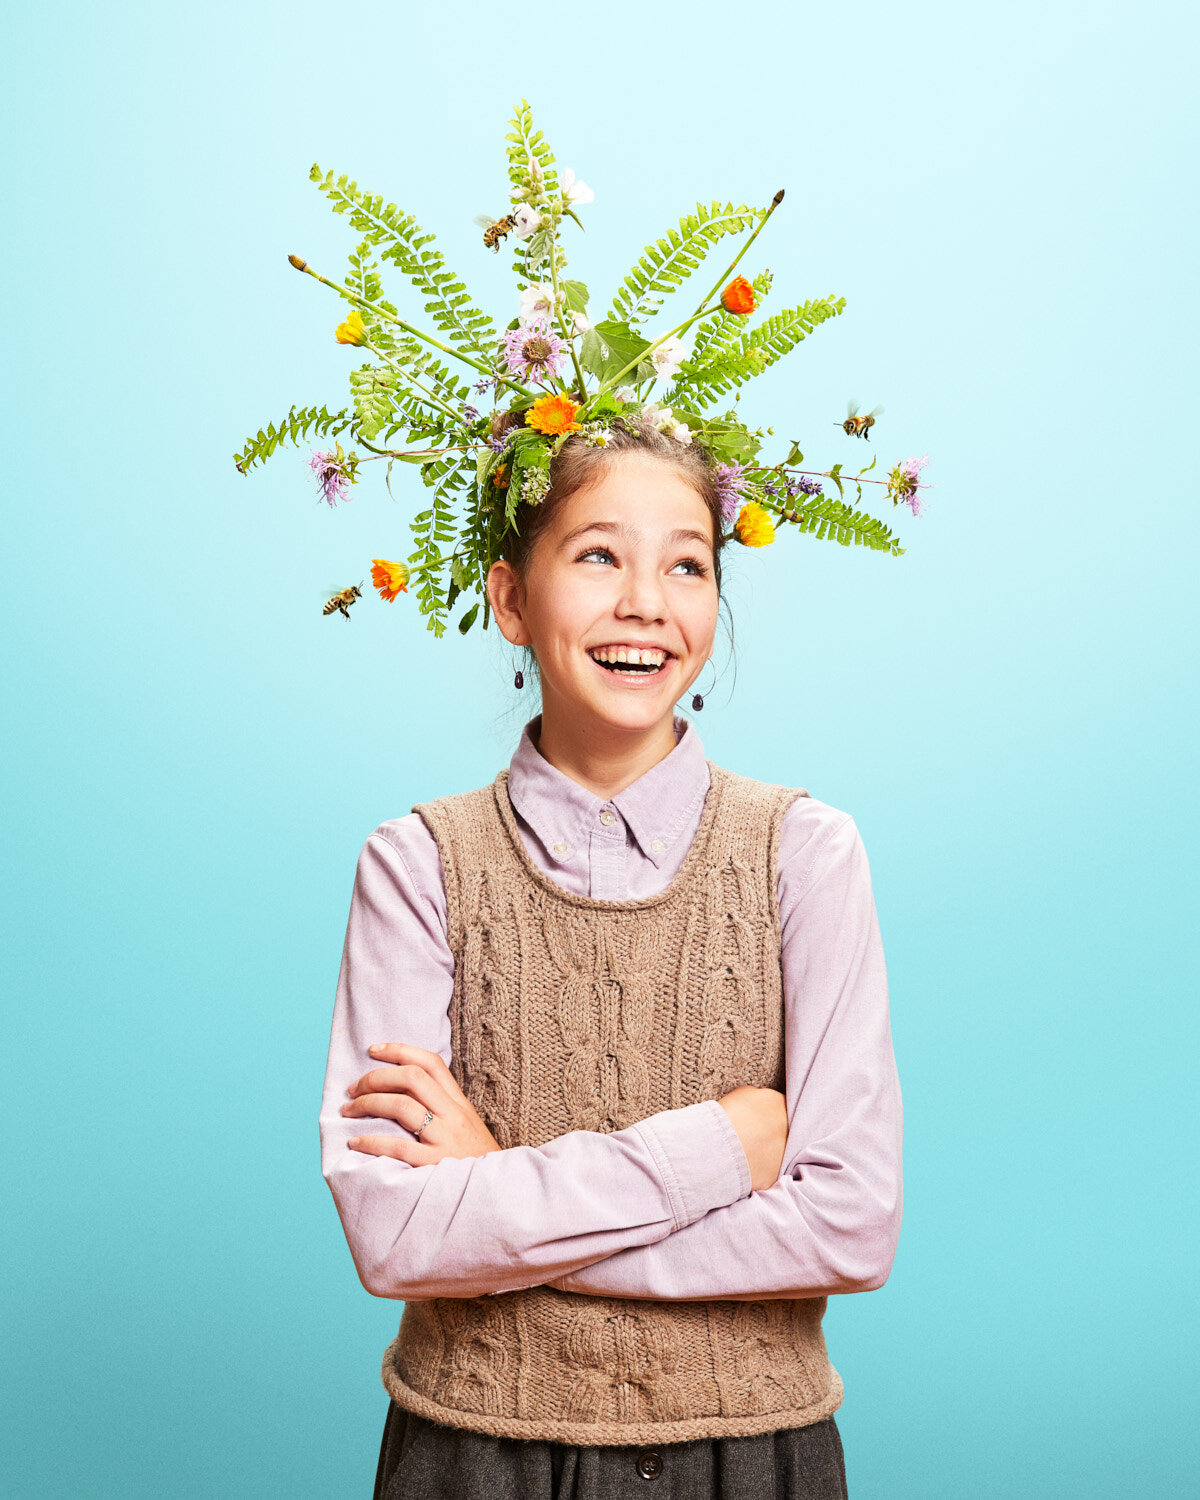 whimsical studio portrait of girl with giant flower headpiece by creative portrait photographer Hanna Agar